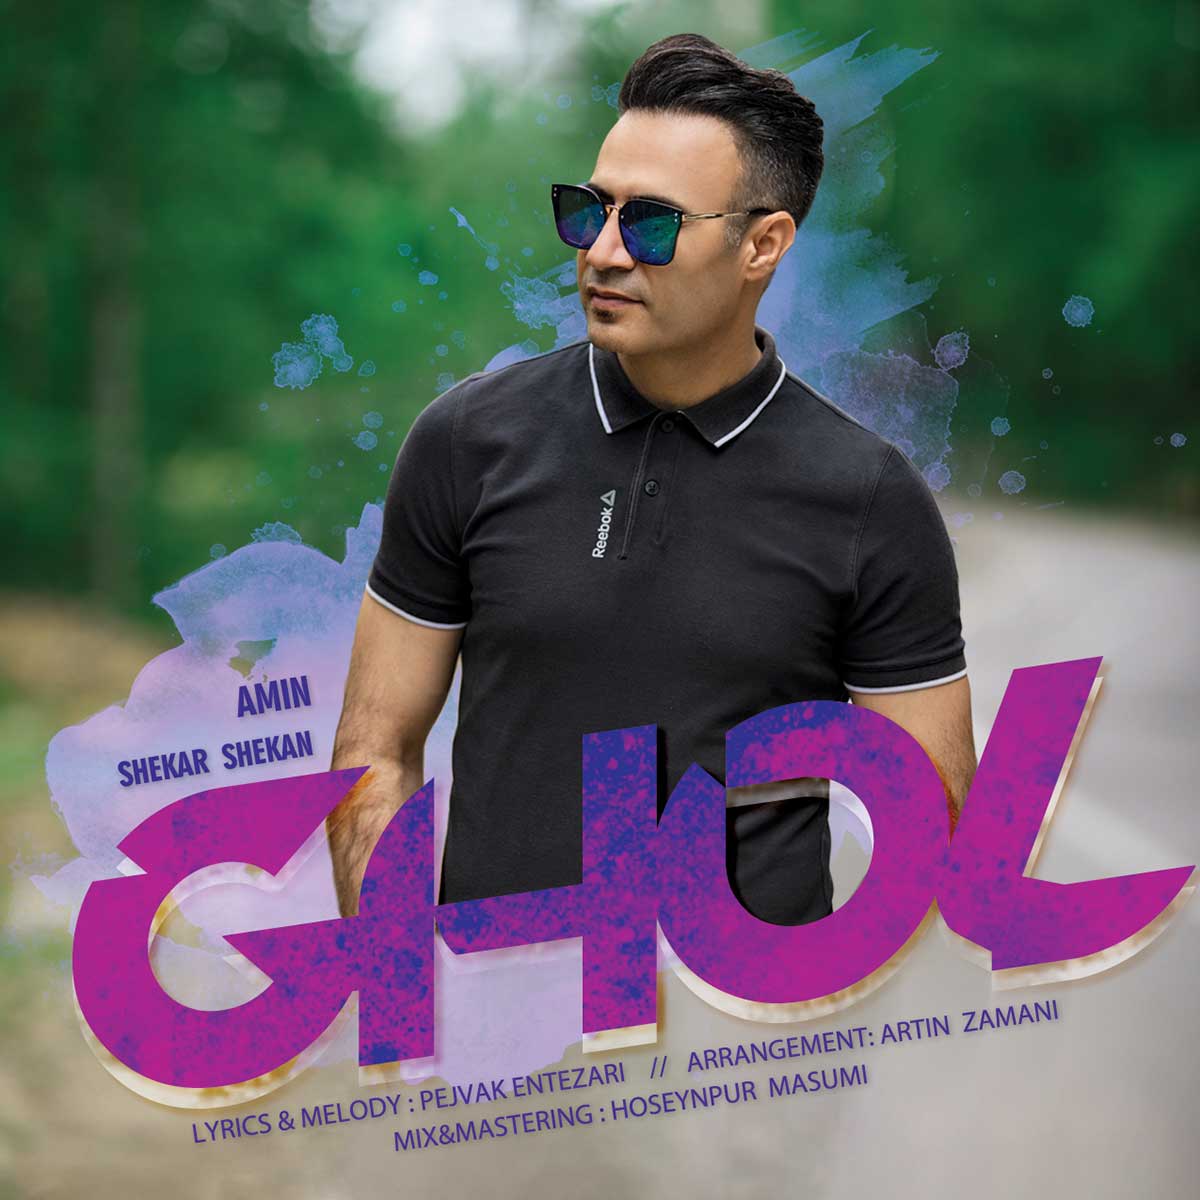  دانلود آهنگ جدید امین شکرشکن - قول | Download New Music By Amin Shekarshekan - Ghol